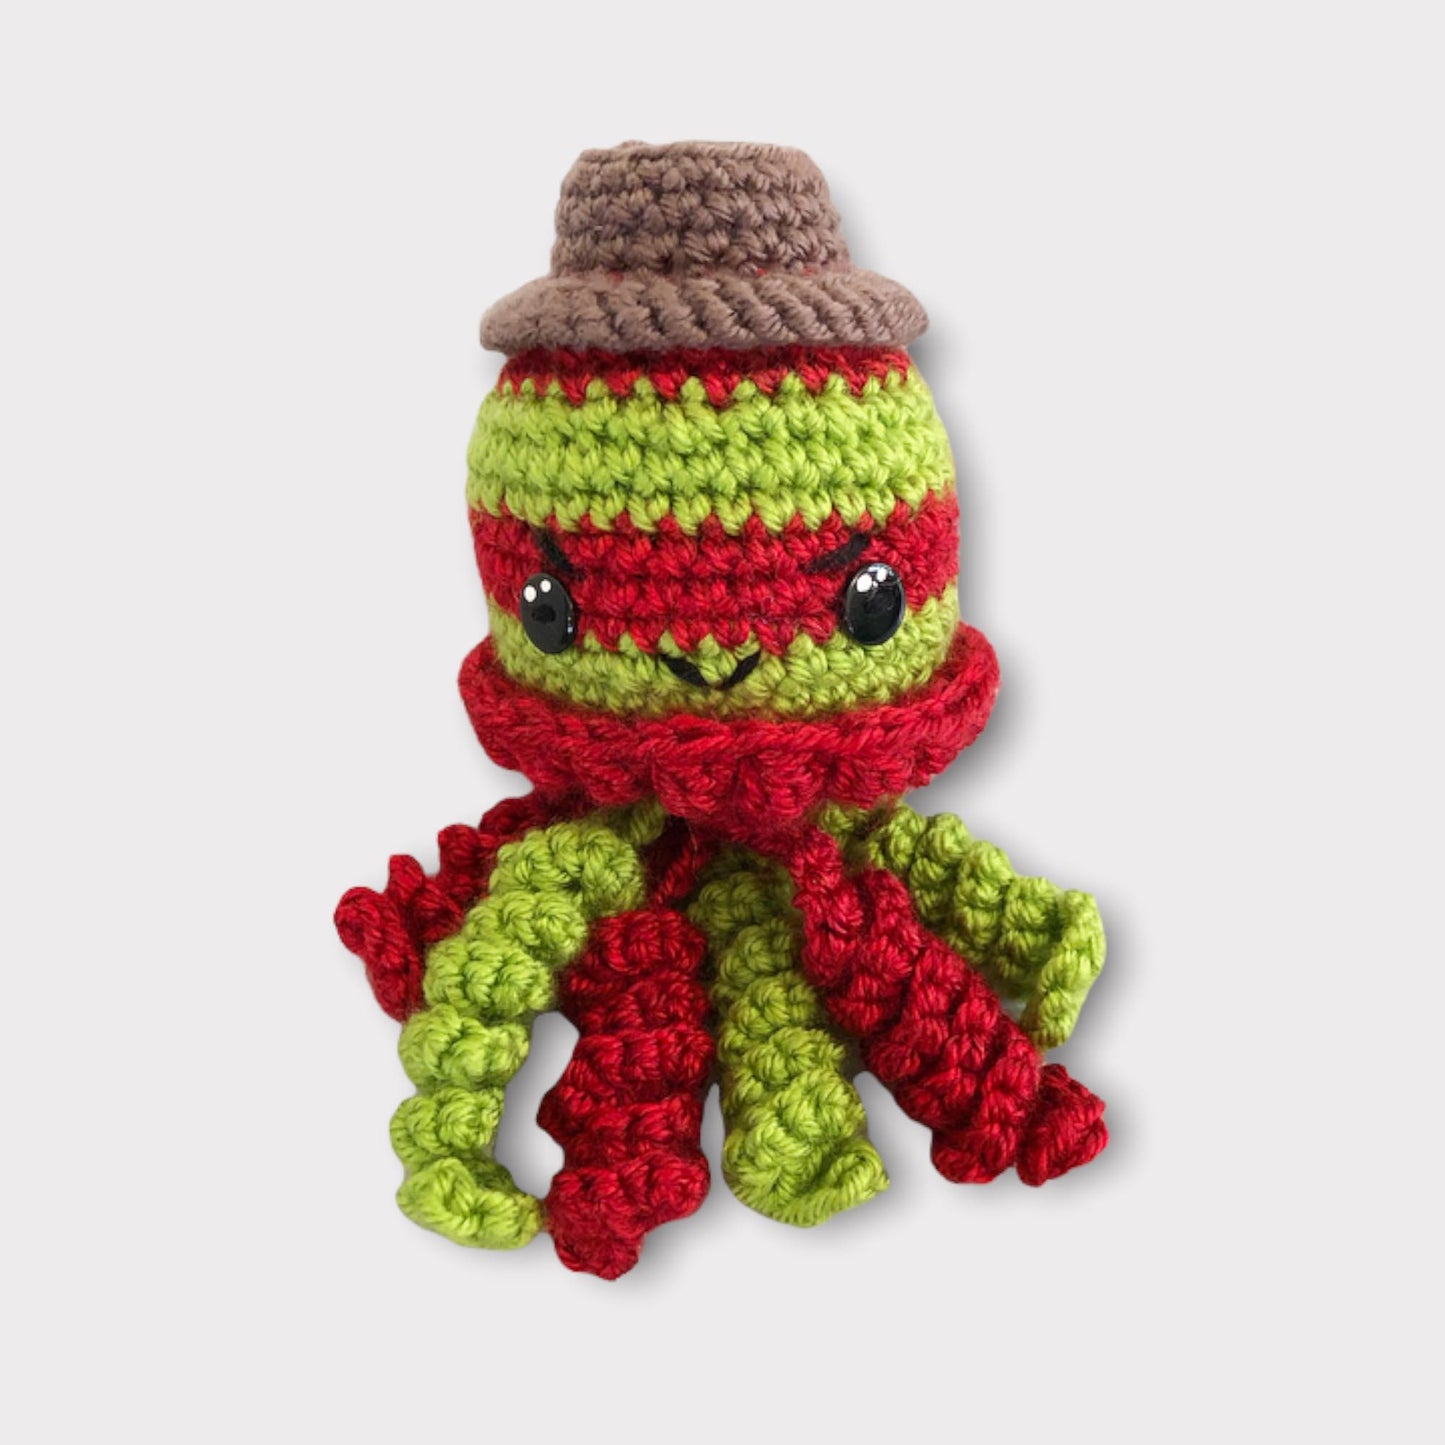 PATTERN PACK: Crochet horror villain jellies - Freddy, Pennywise, Chucky, Sam